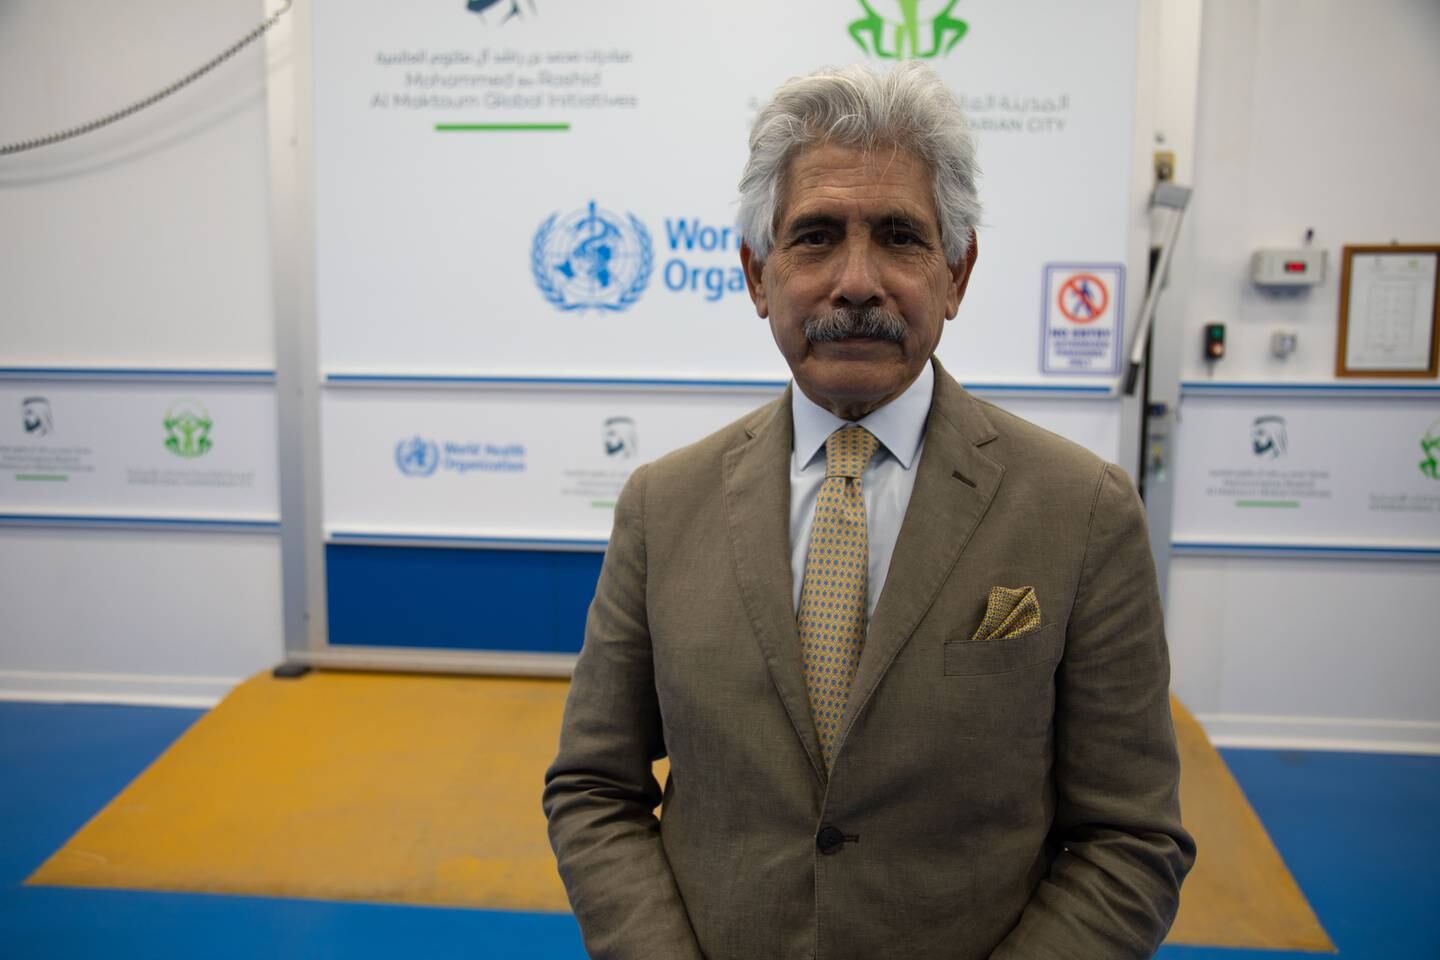 Giuseppe Saba, chief executive of Dubai's International Humanitarian City, at the WHO warehouse. Suhail Akram / The National